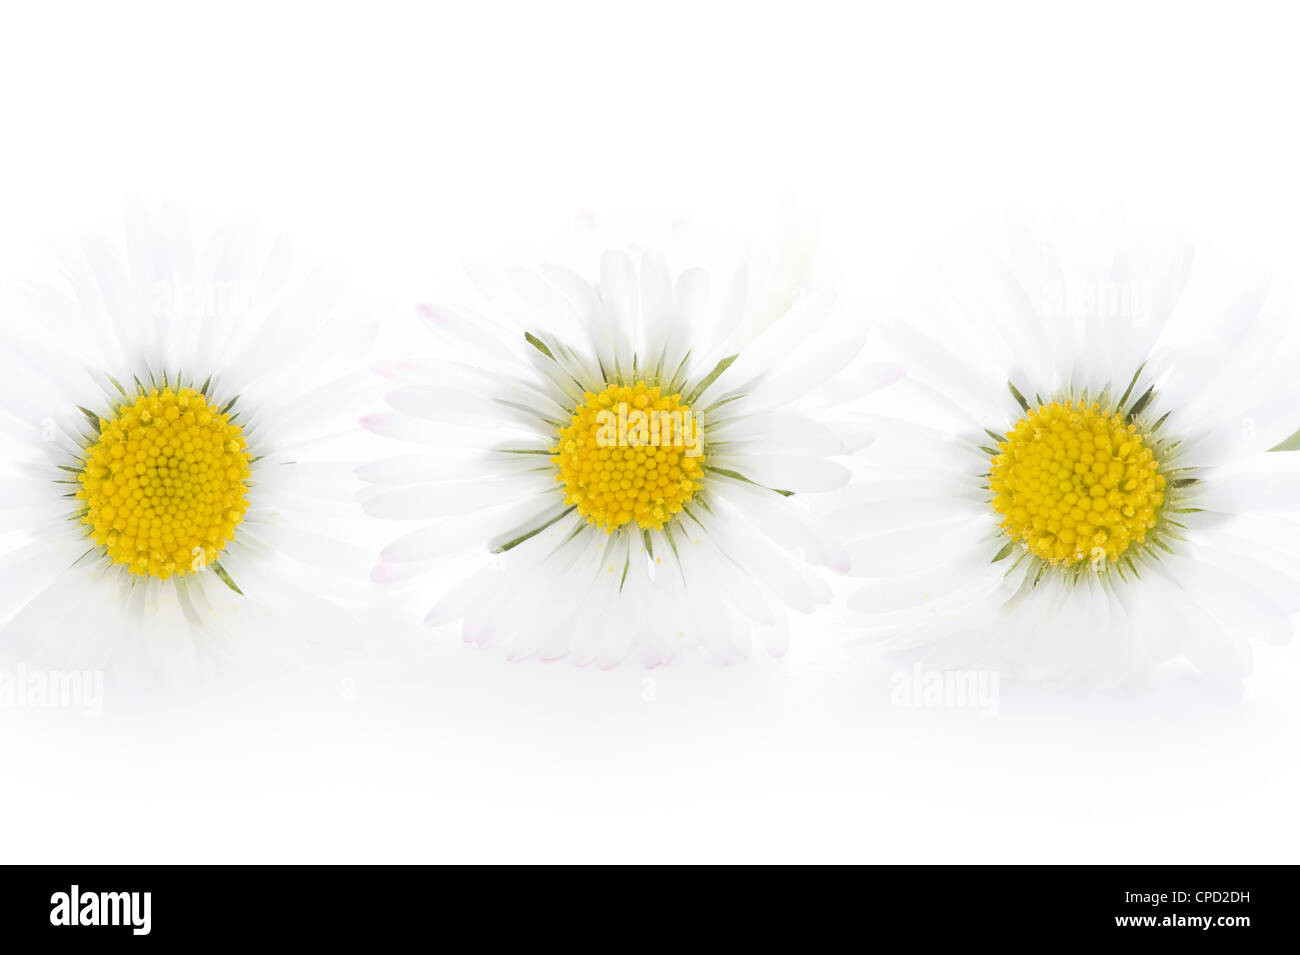 three daisies studio shot on white background Stock Photo